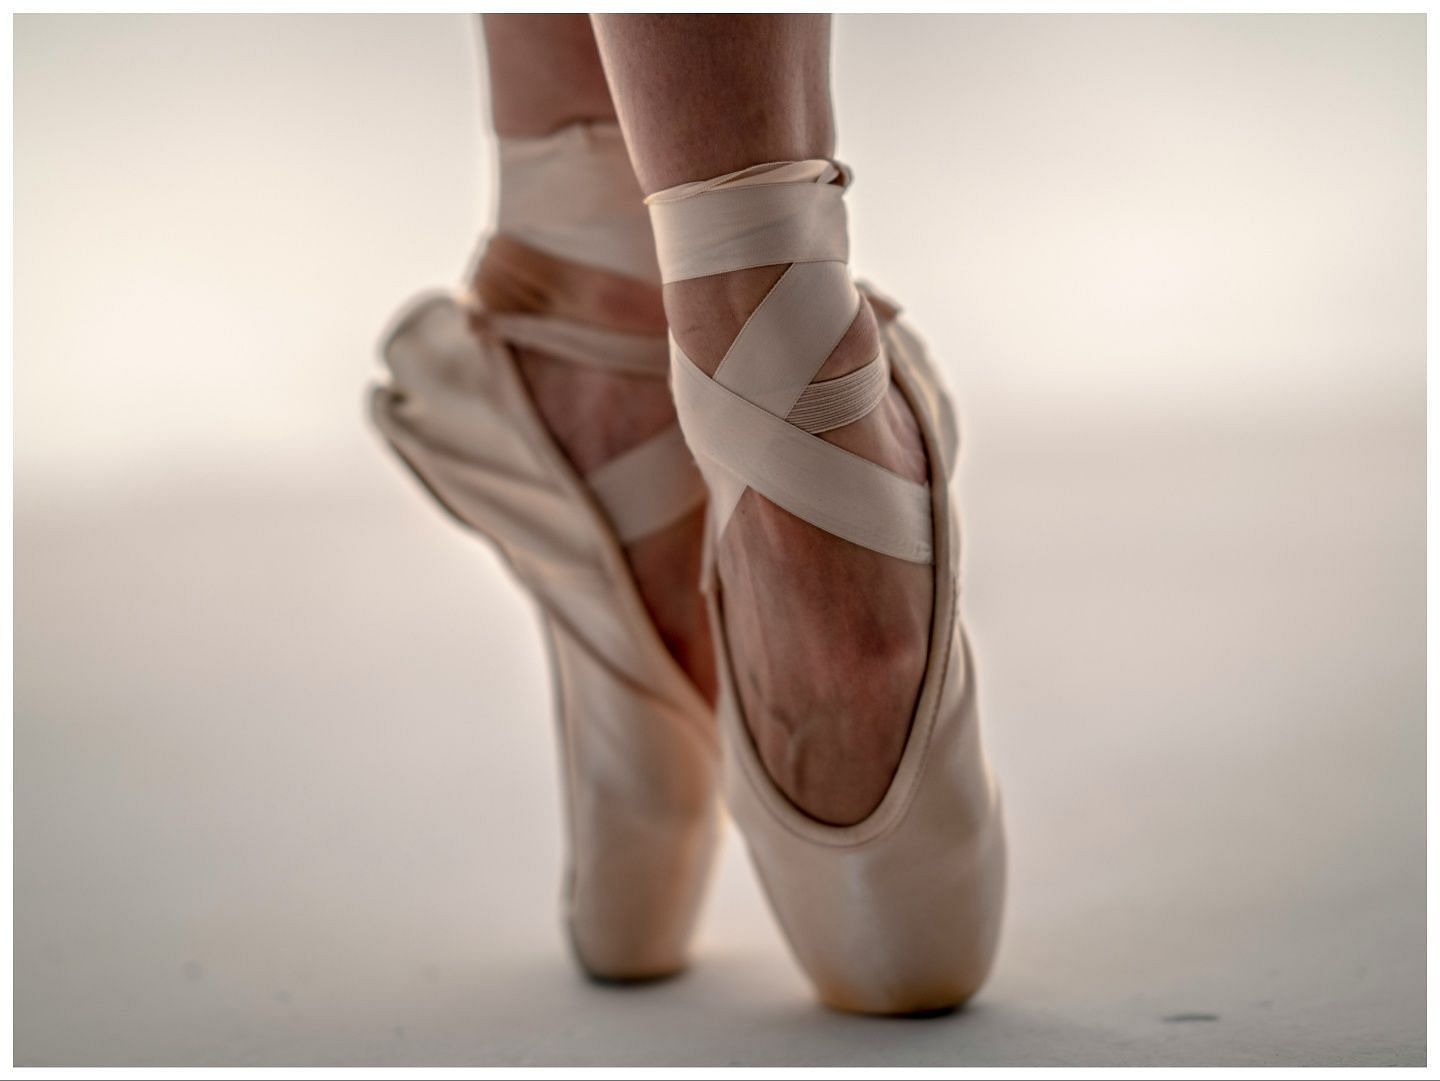 Incredible looking legs of ballet dancer (Image via Unsplash/ Nihal Demirci)